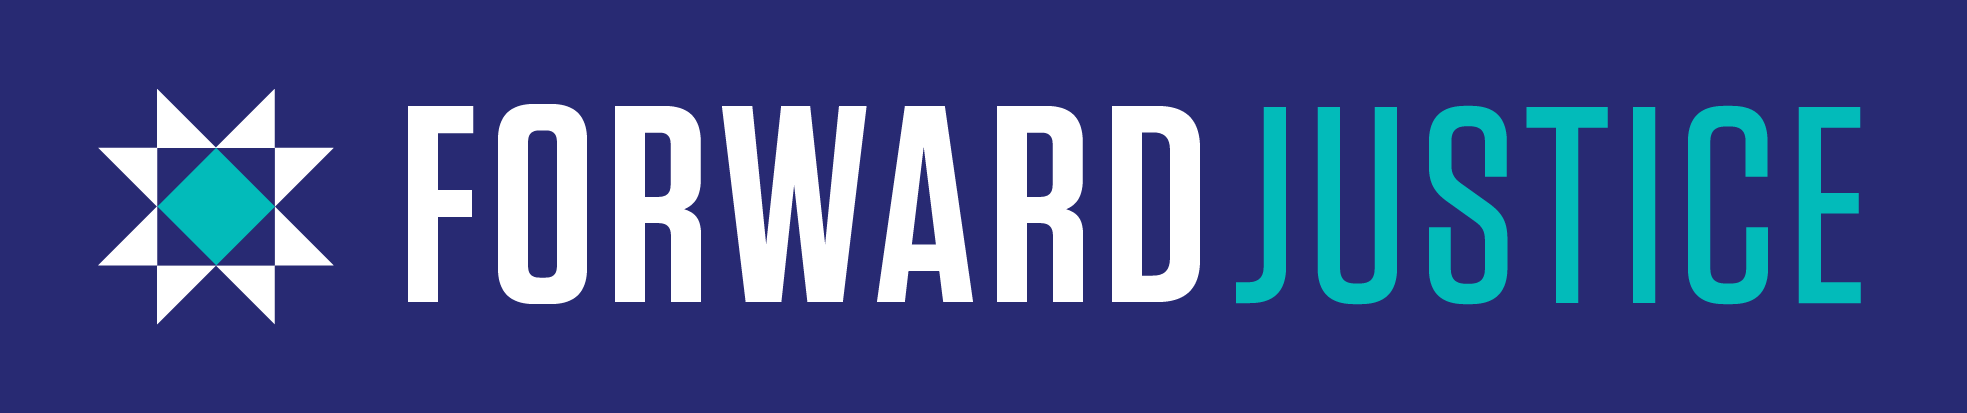 Forward Justice logo